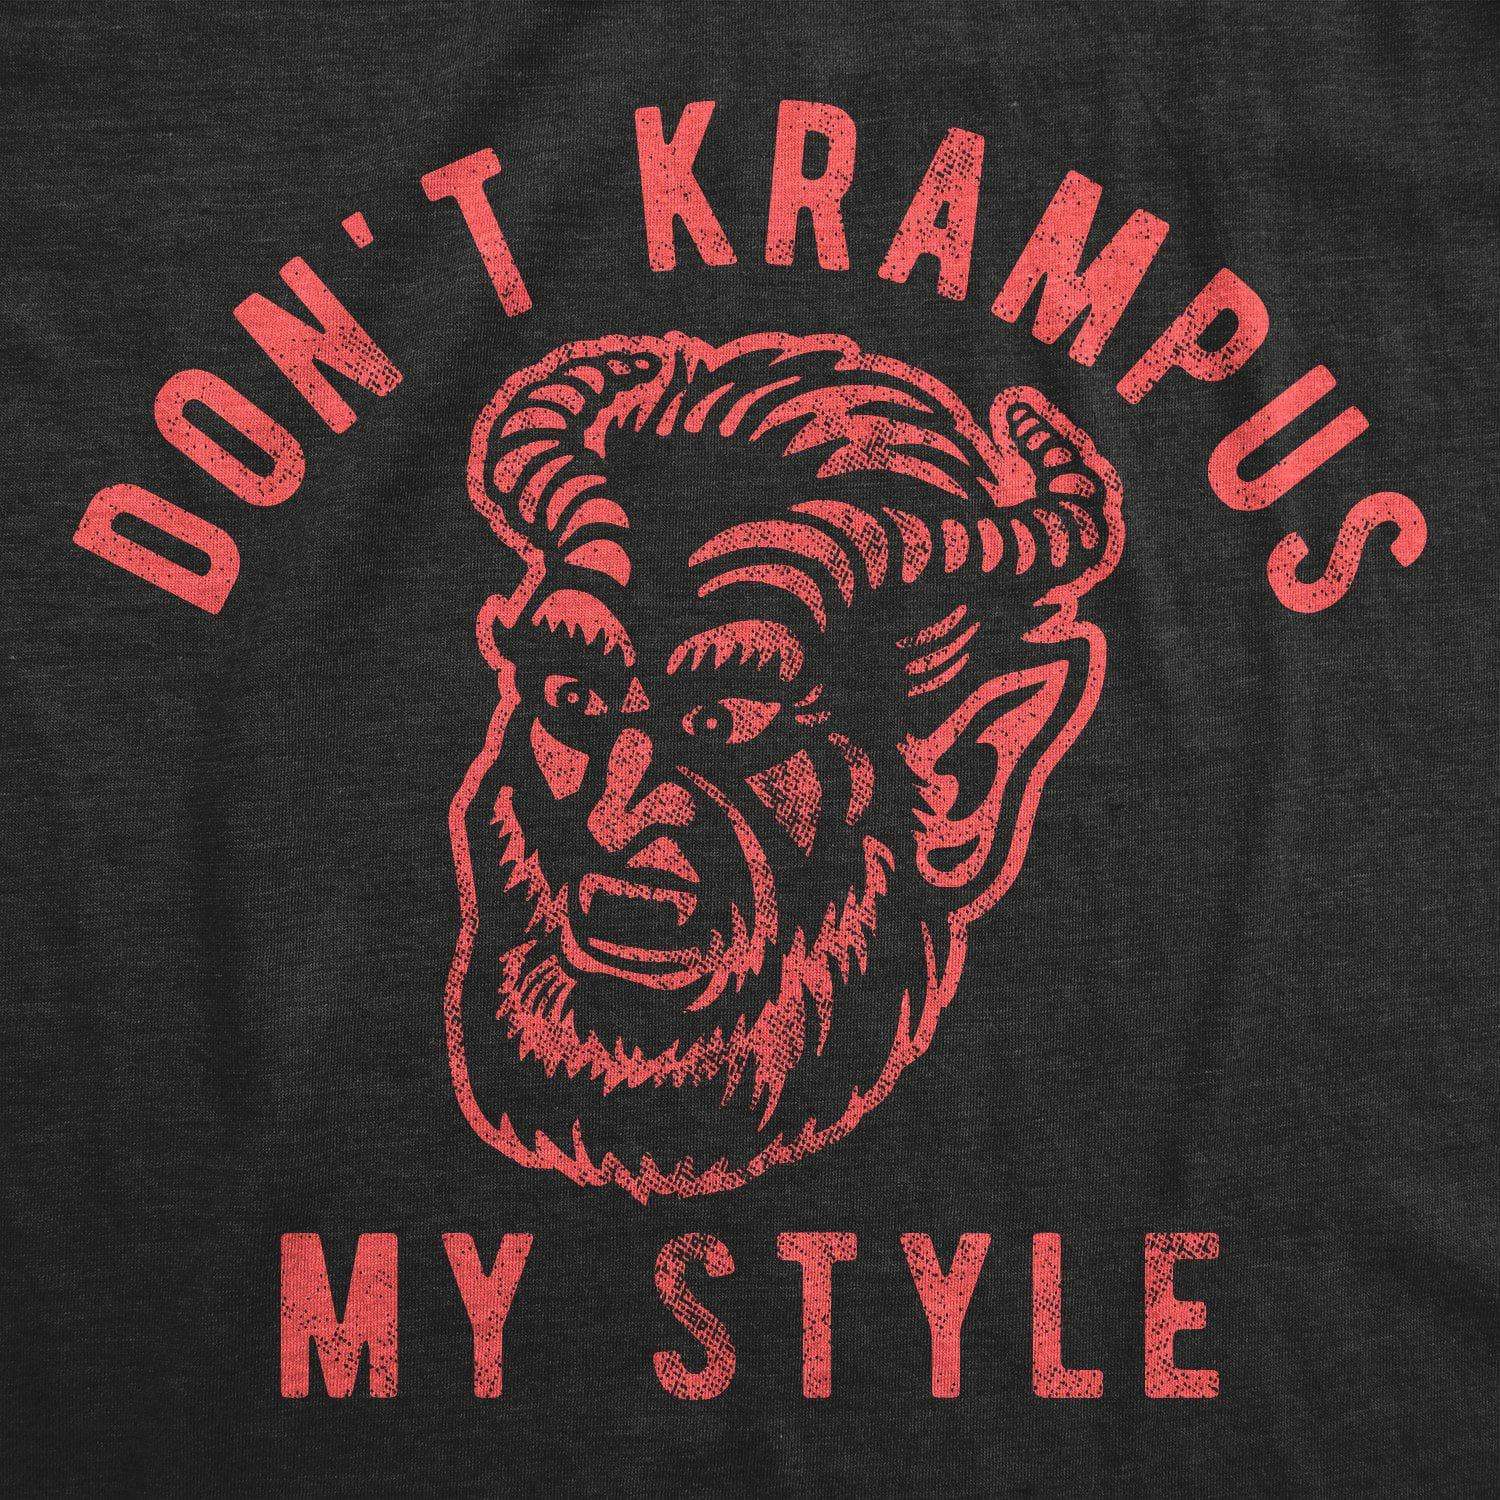 Don't Krampus My Style Men's Tshirt - Crazy Dog T-Shirts